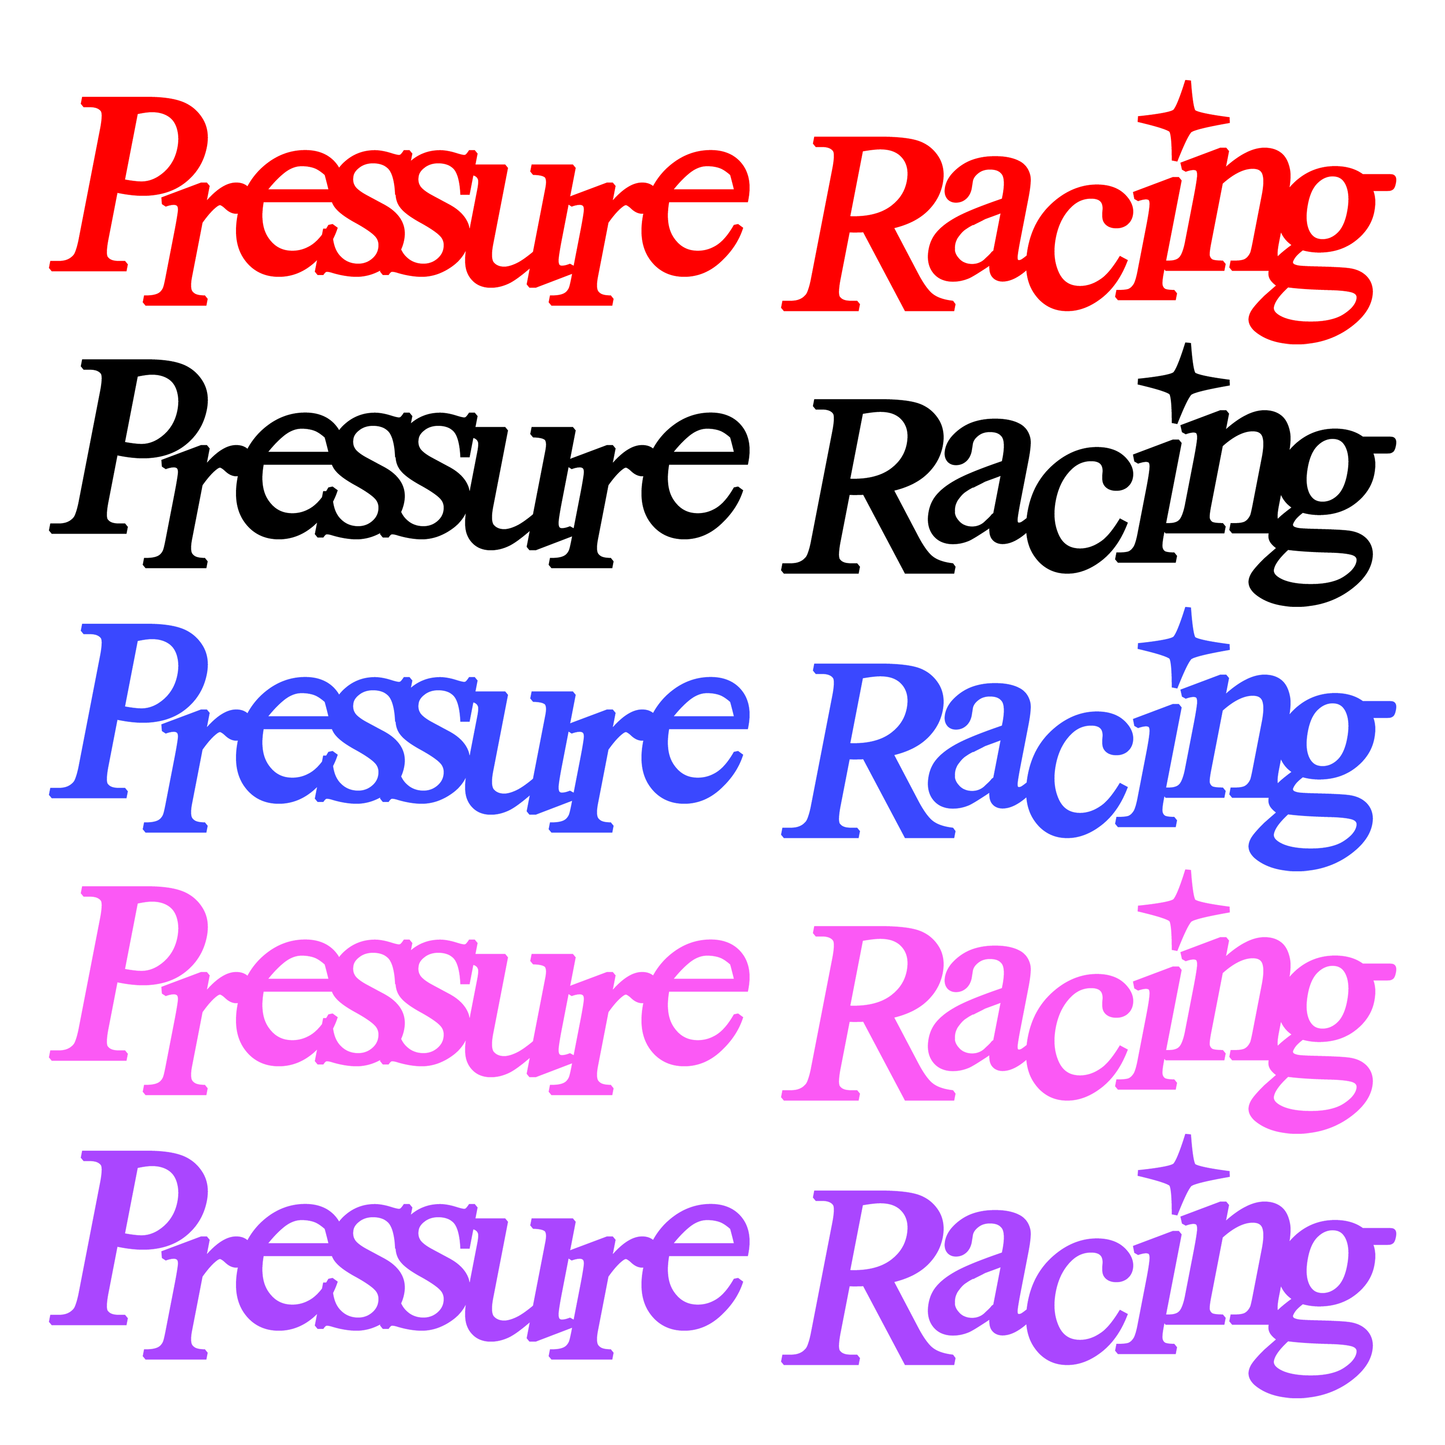 Pressure Racing OG Decal